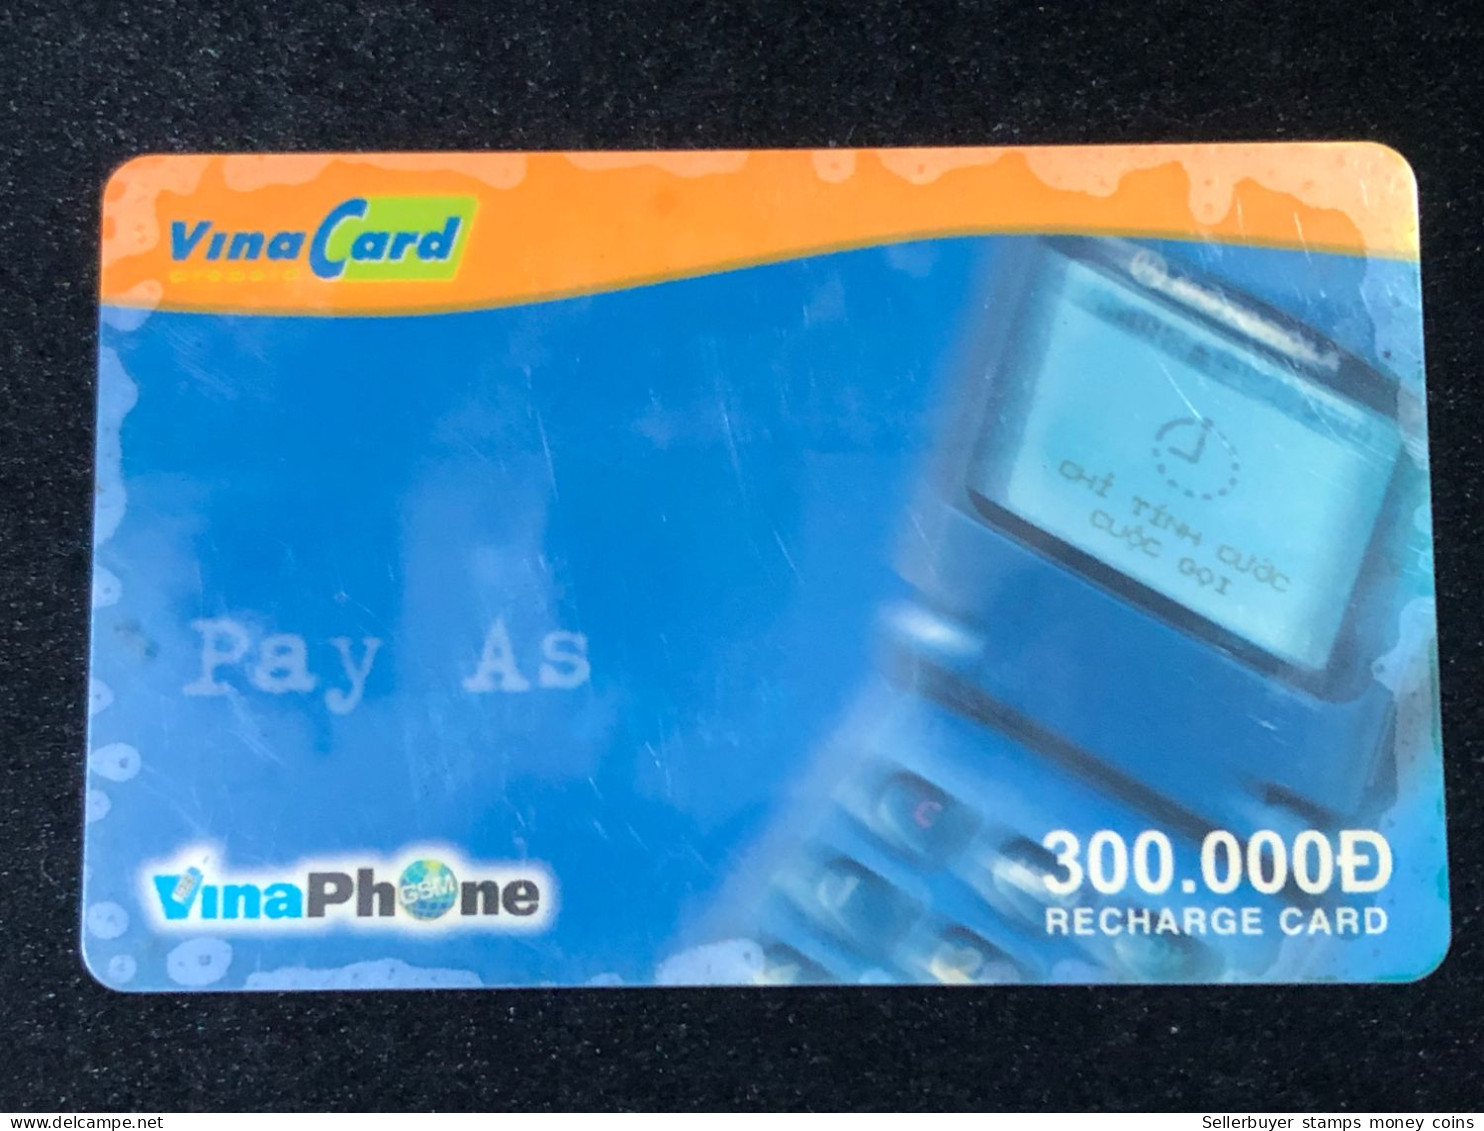 Vietnam This Is A Vietnamese Cardphone Card From 2001 And 2005(mobi Card)-1pcs - Viêt-Nam